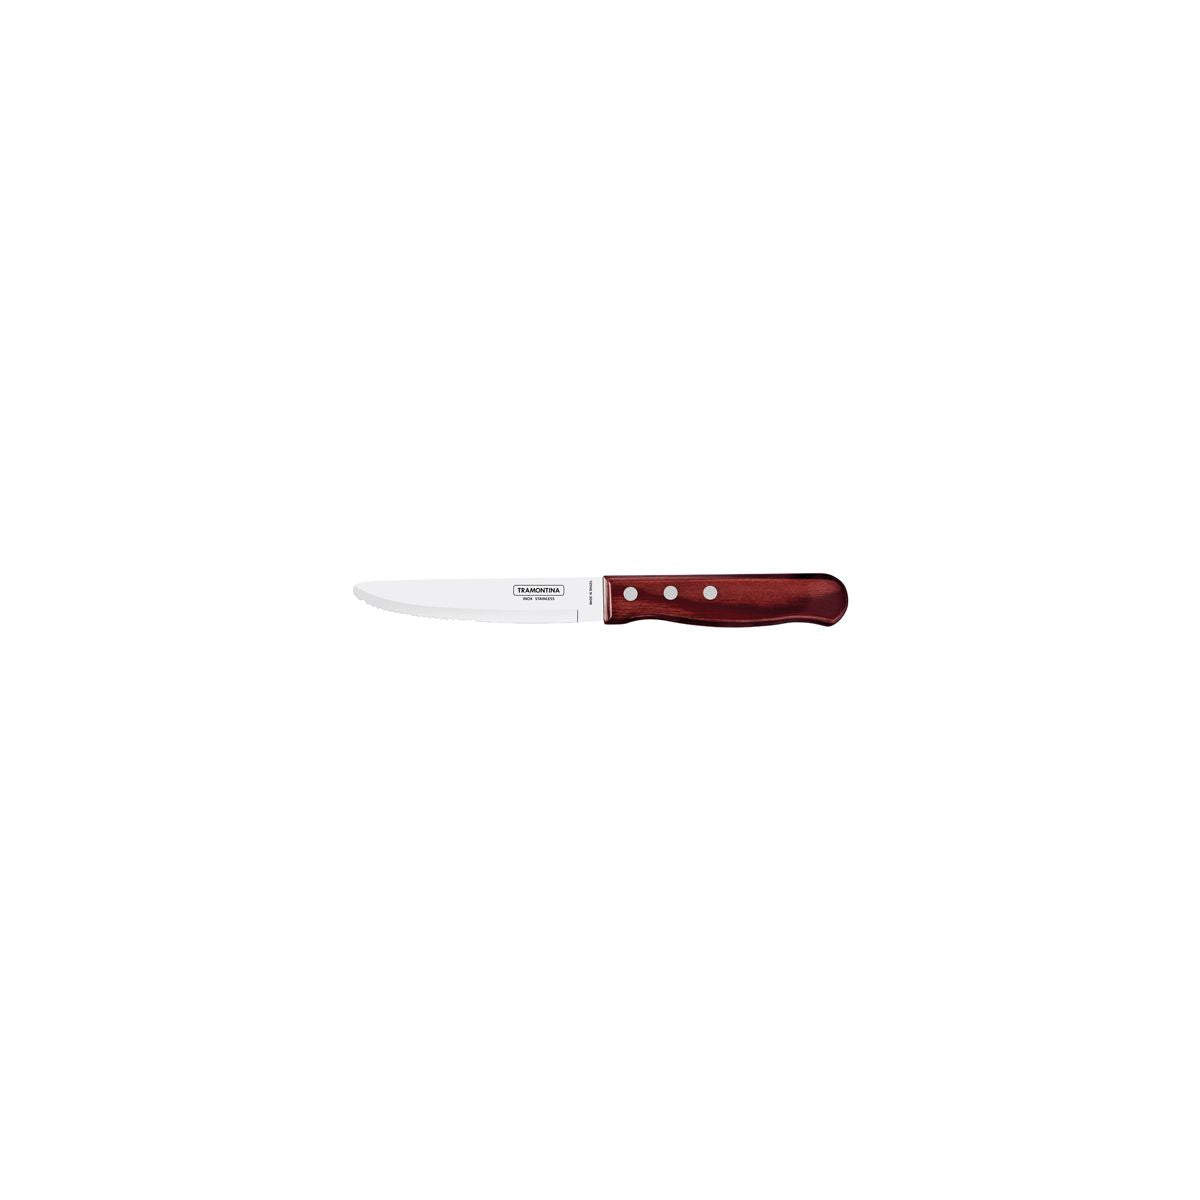 Polywood Churrasco Steak Knife Serrated Wide Blade Redwood 127mm: Pack of 12